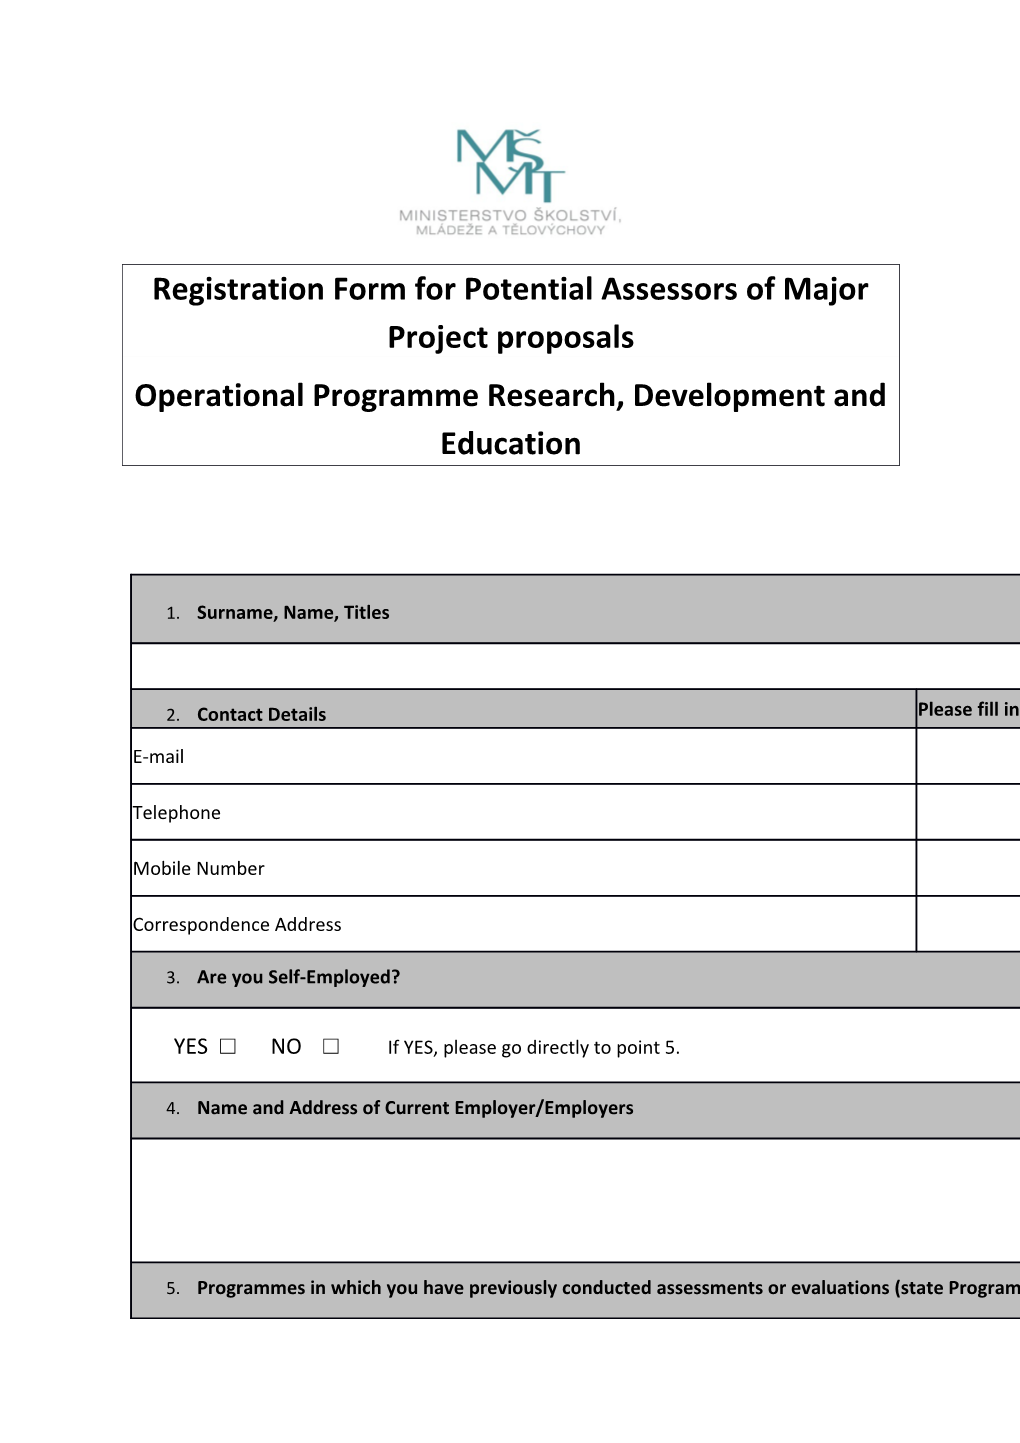 Registration Form for Potential Assessors of Major Project Proposals